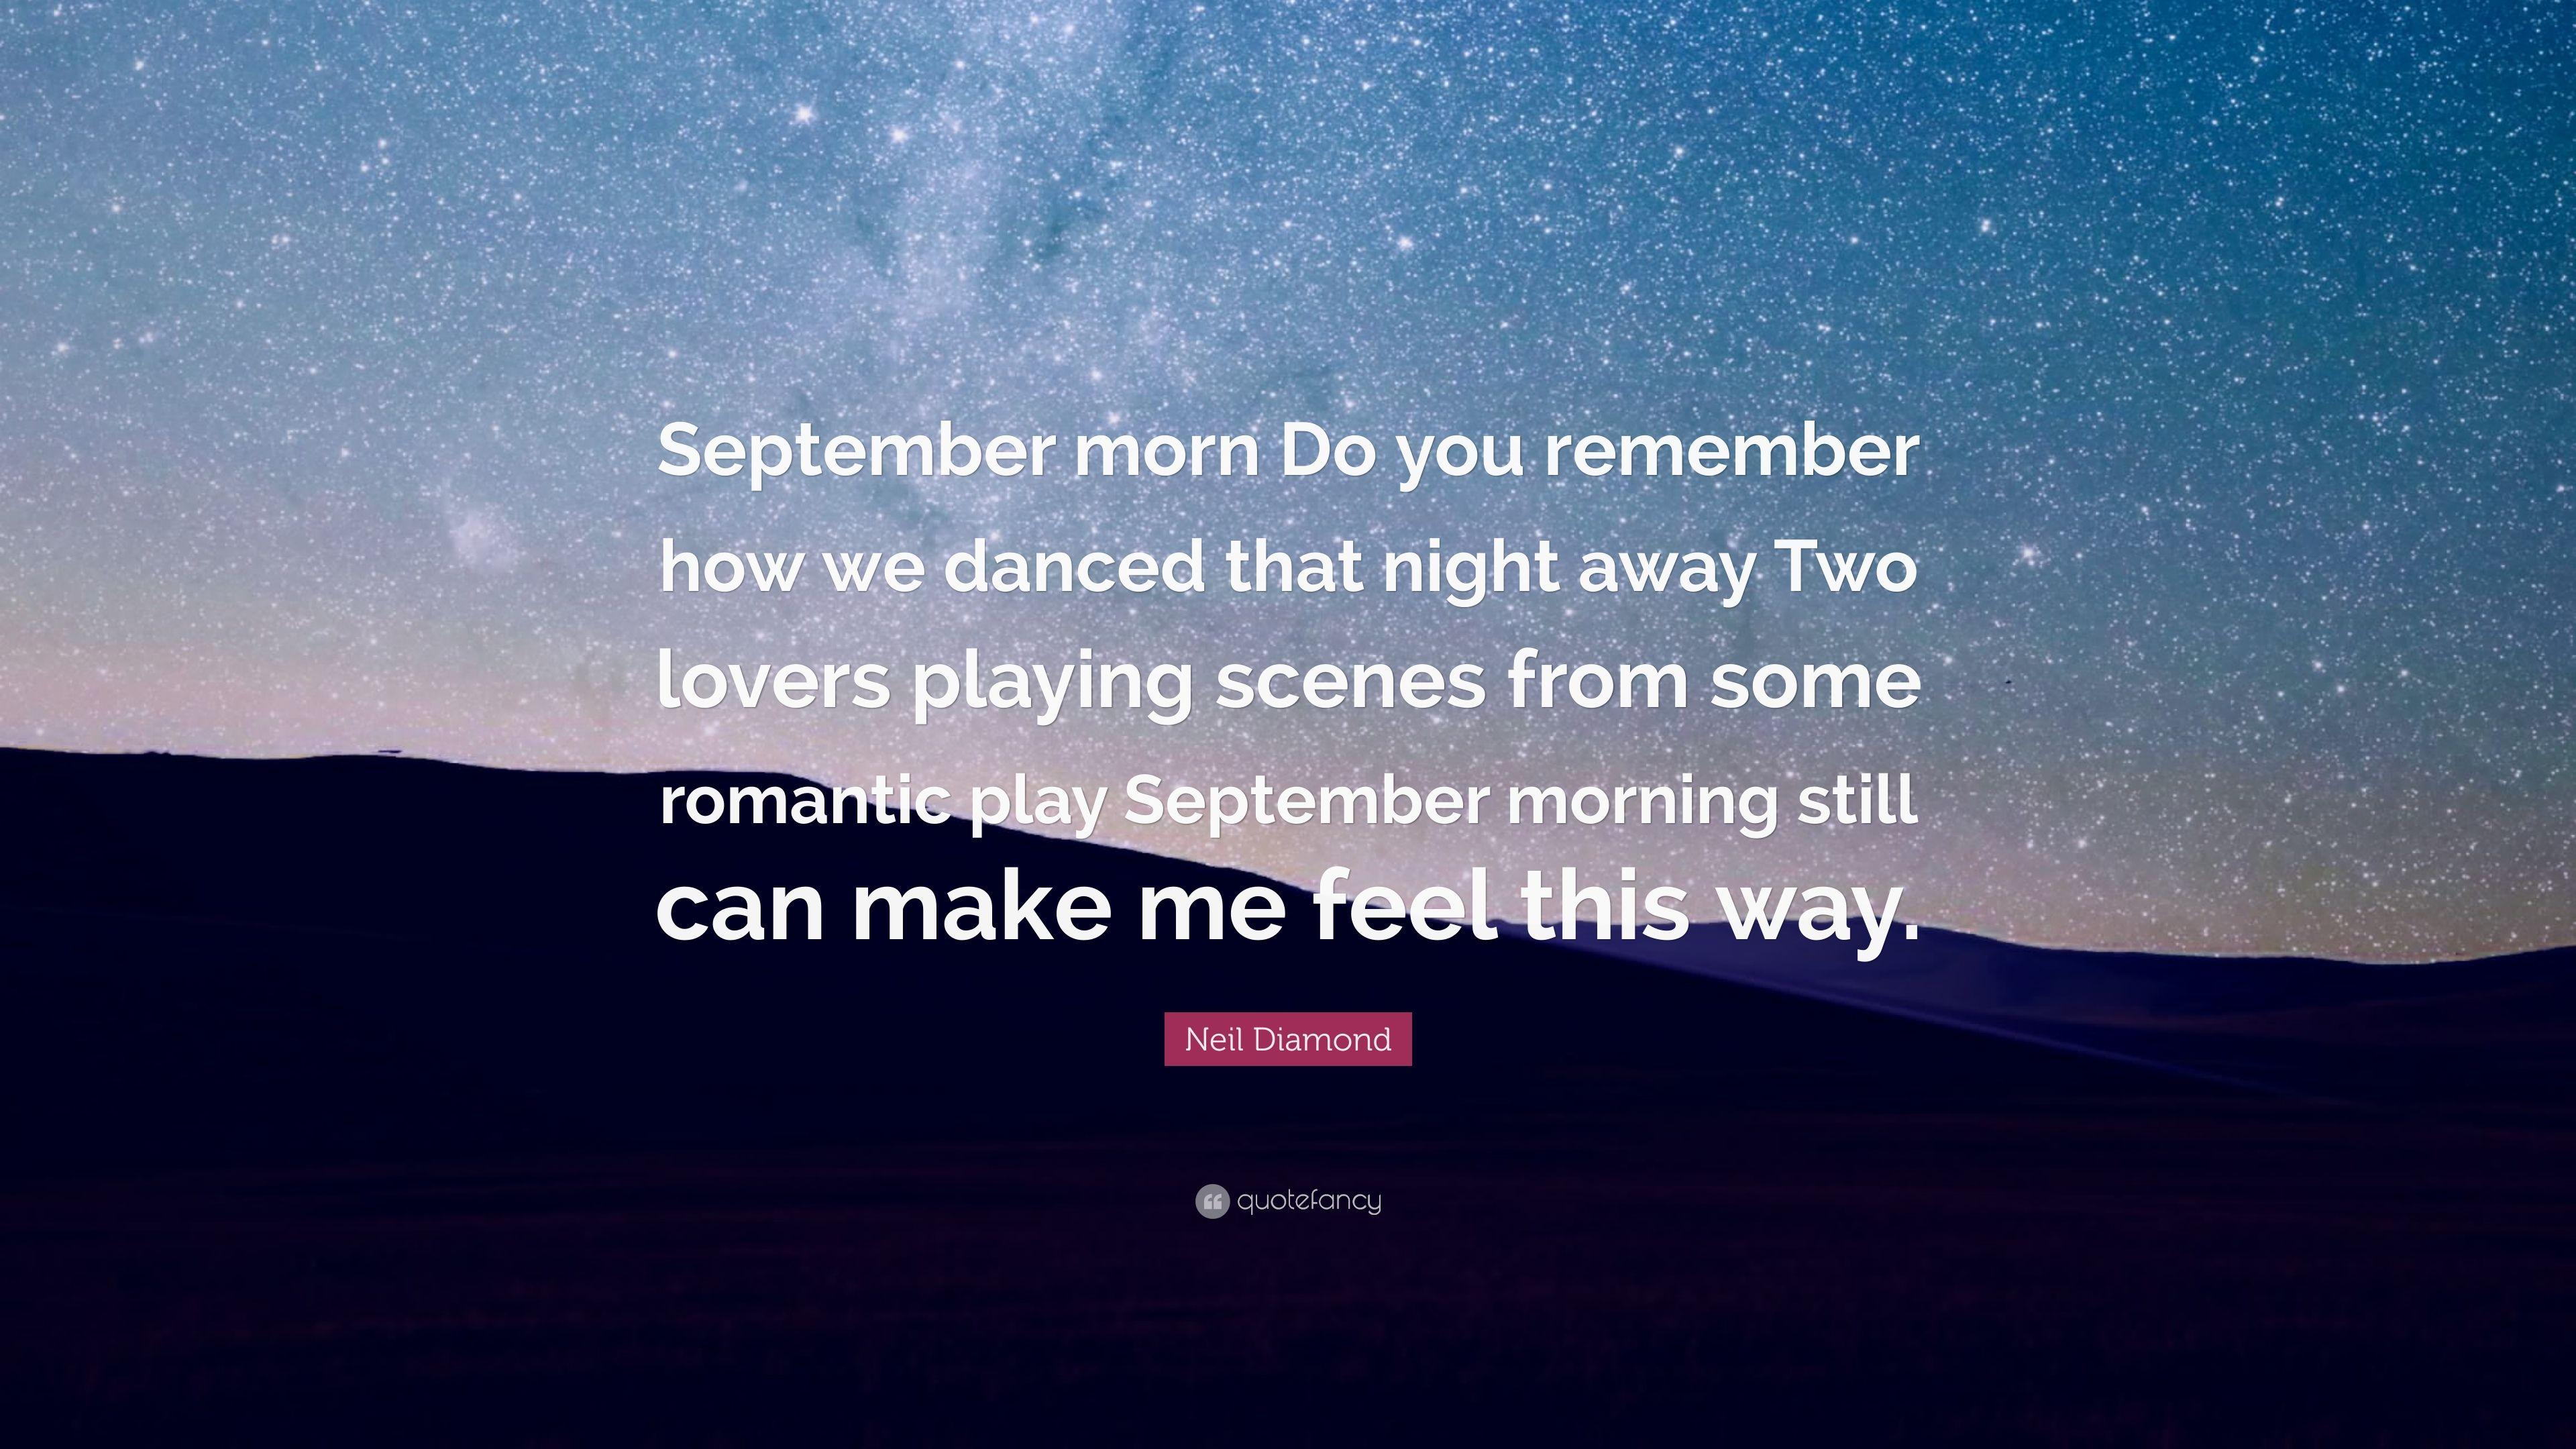 Neil Diamond Quote: “September morn Do you remember how we danced